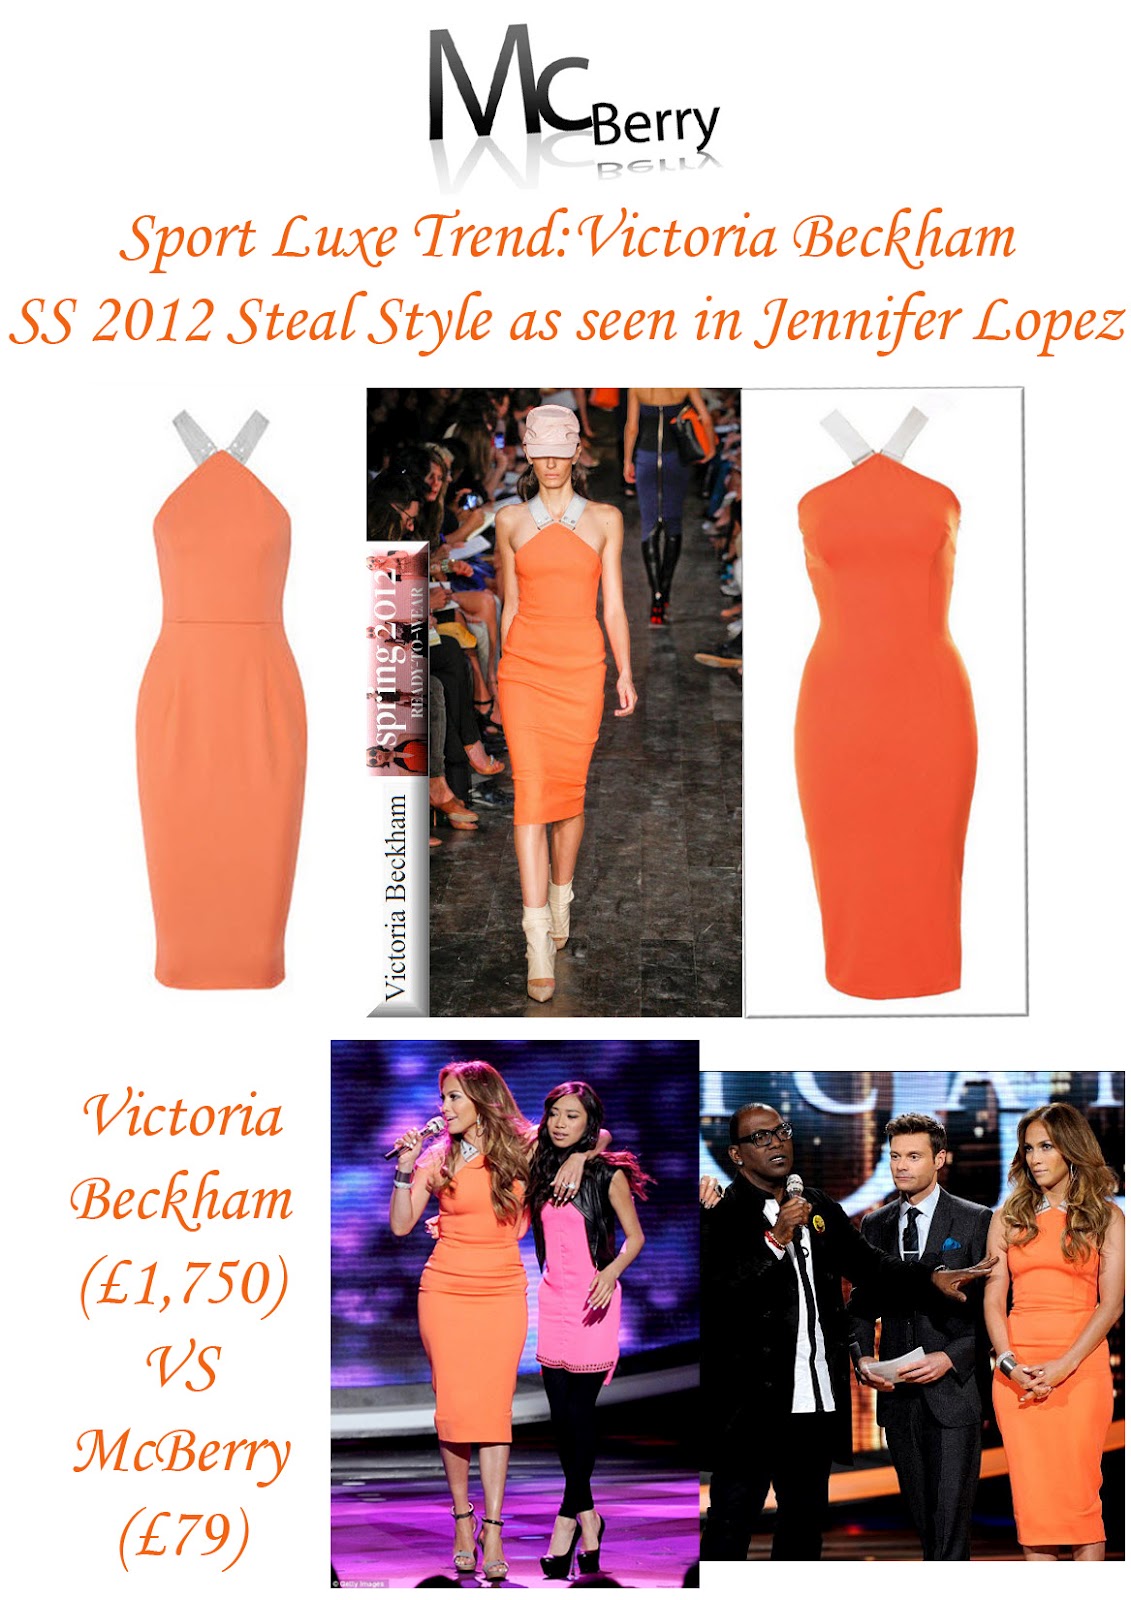 http://3.bp.blogspot.com/-7fCcrB8hZbA/T7uTnodlI7I/AAAAAAAAAZw/WYvkBHSv4bQ/s1600/Looksheet_Victoria+Beckham+Asymmetric+strappy+dress.jpg